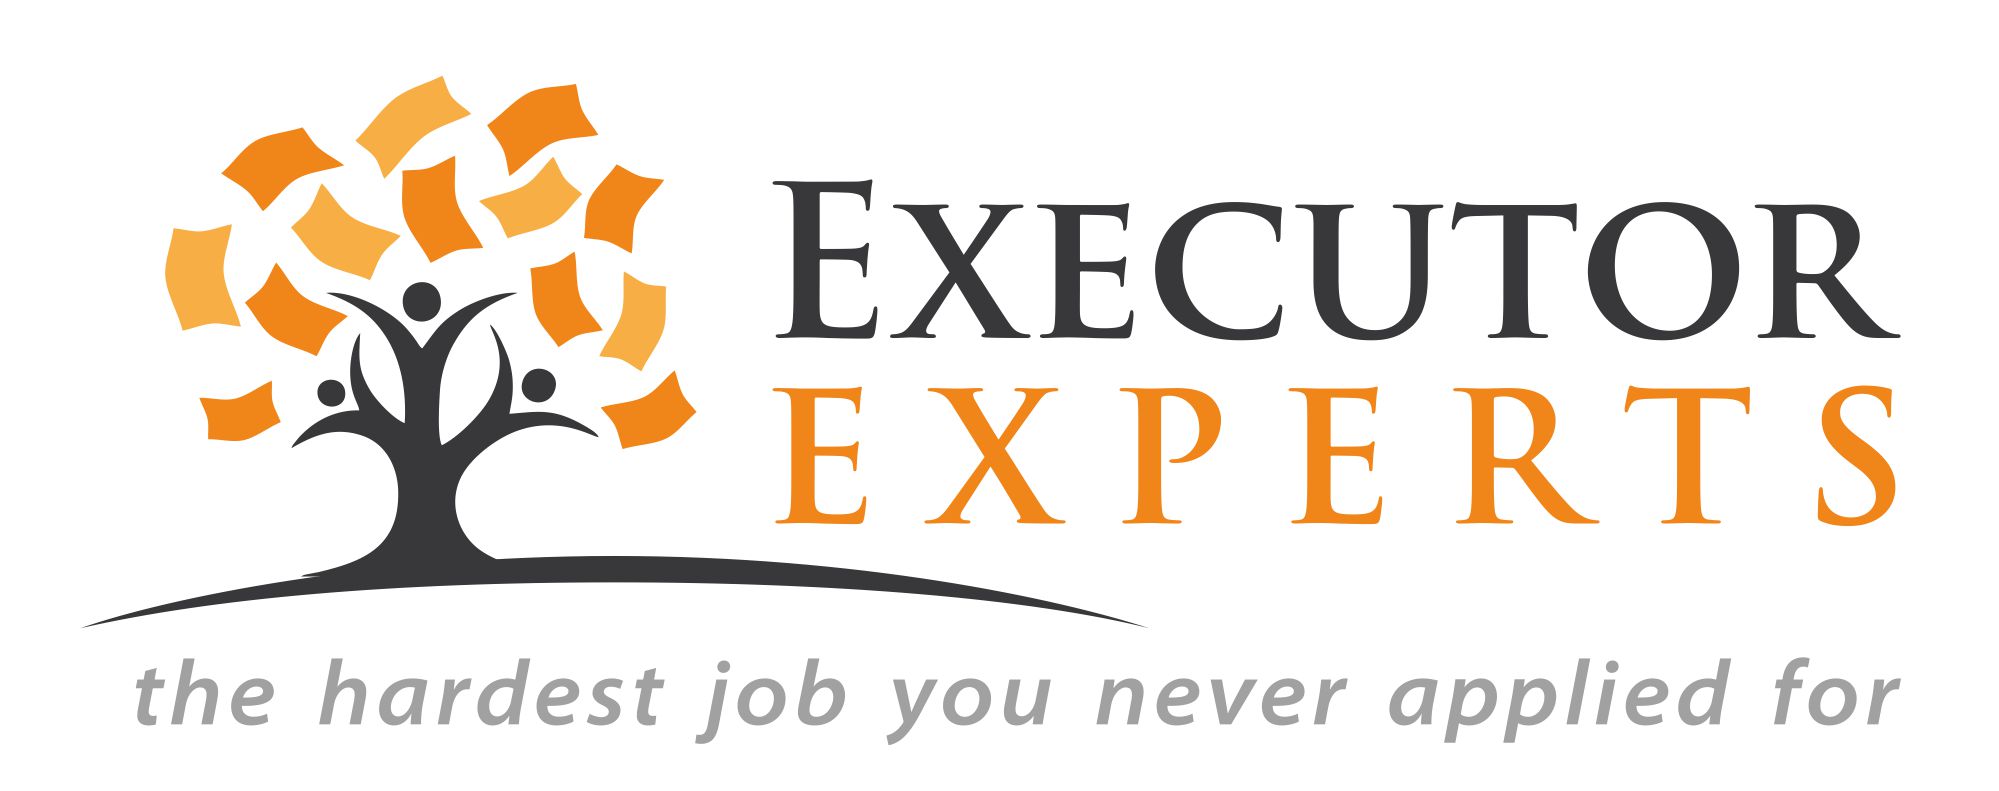 executor experts logo 5.jpg